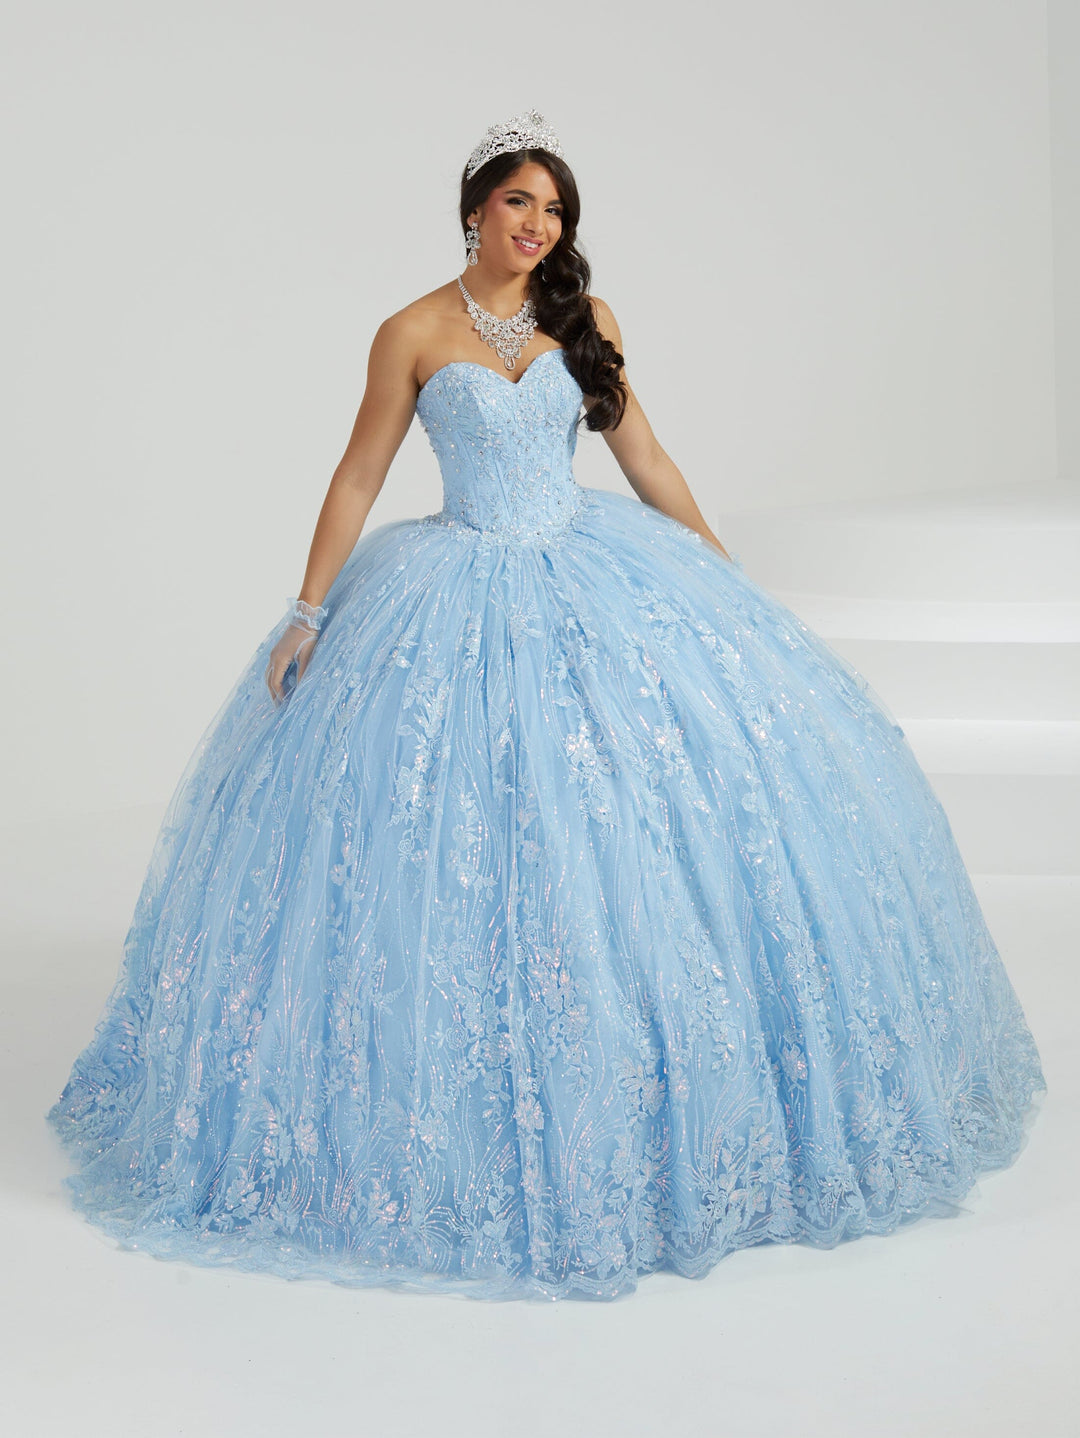 Strapless Corset Quinceanera Dress by Fiesta Gowns 56477